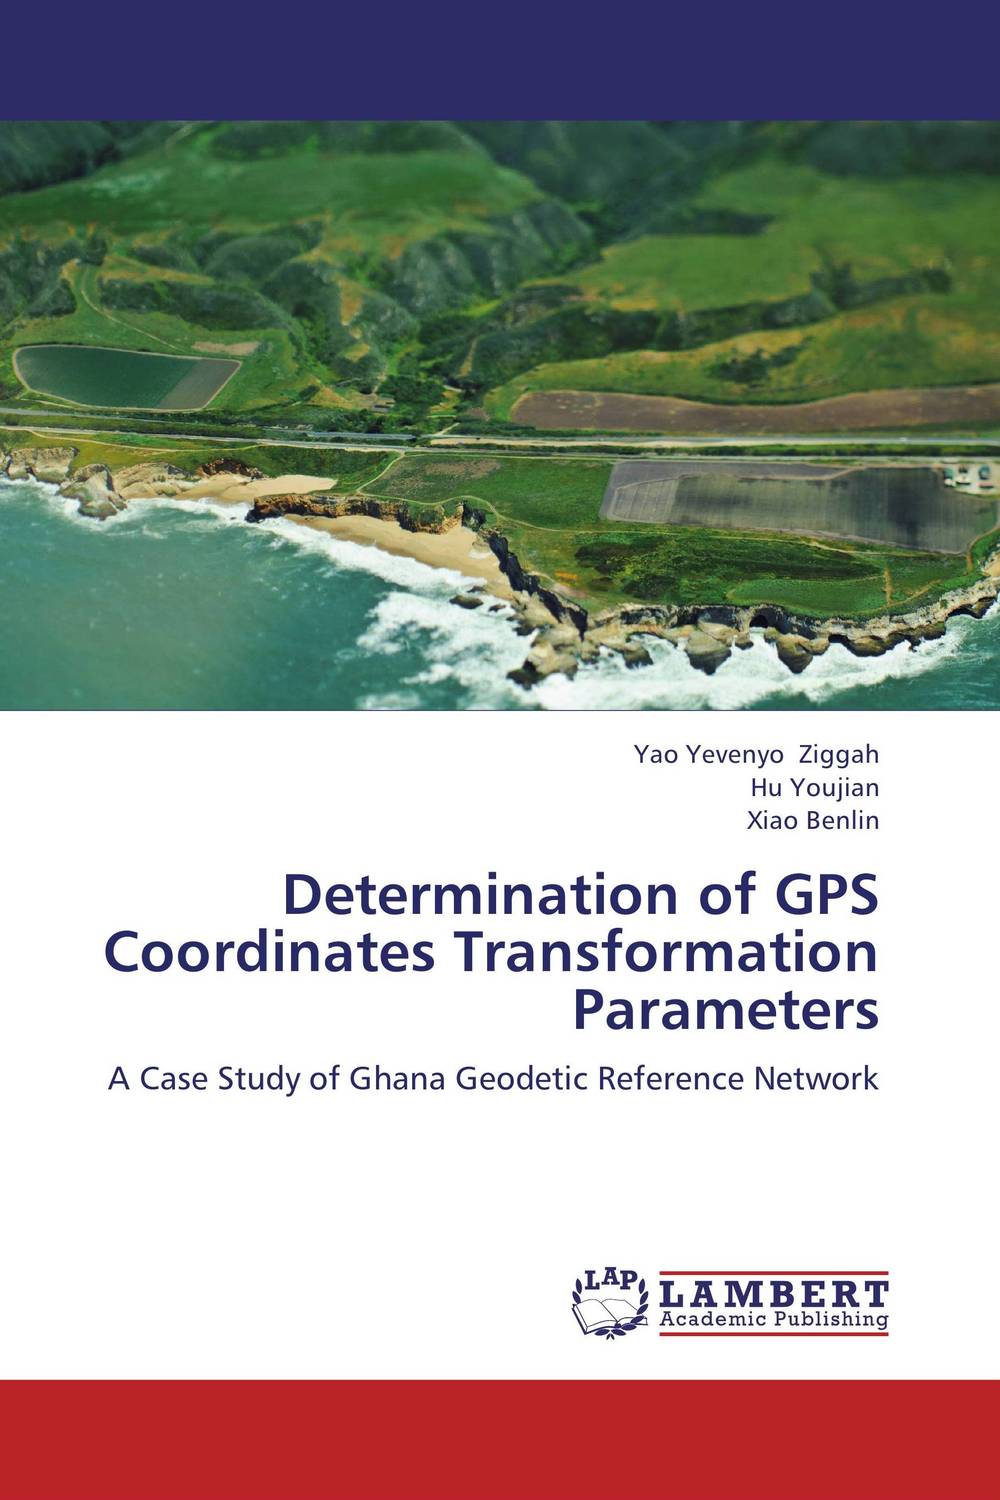 Determination of GPS Coordinates Transformation Parameters